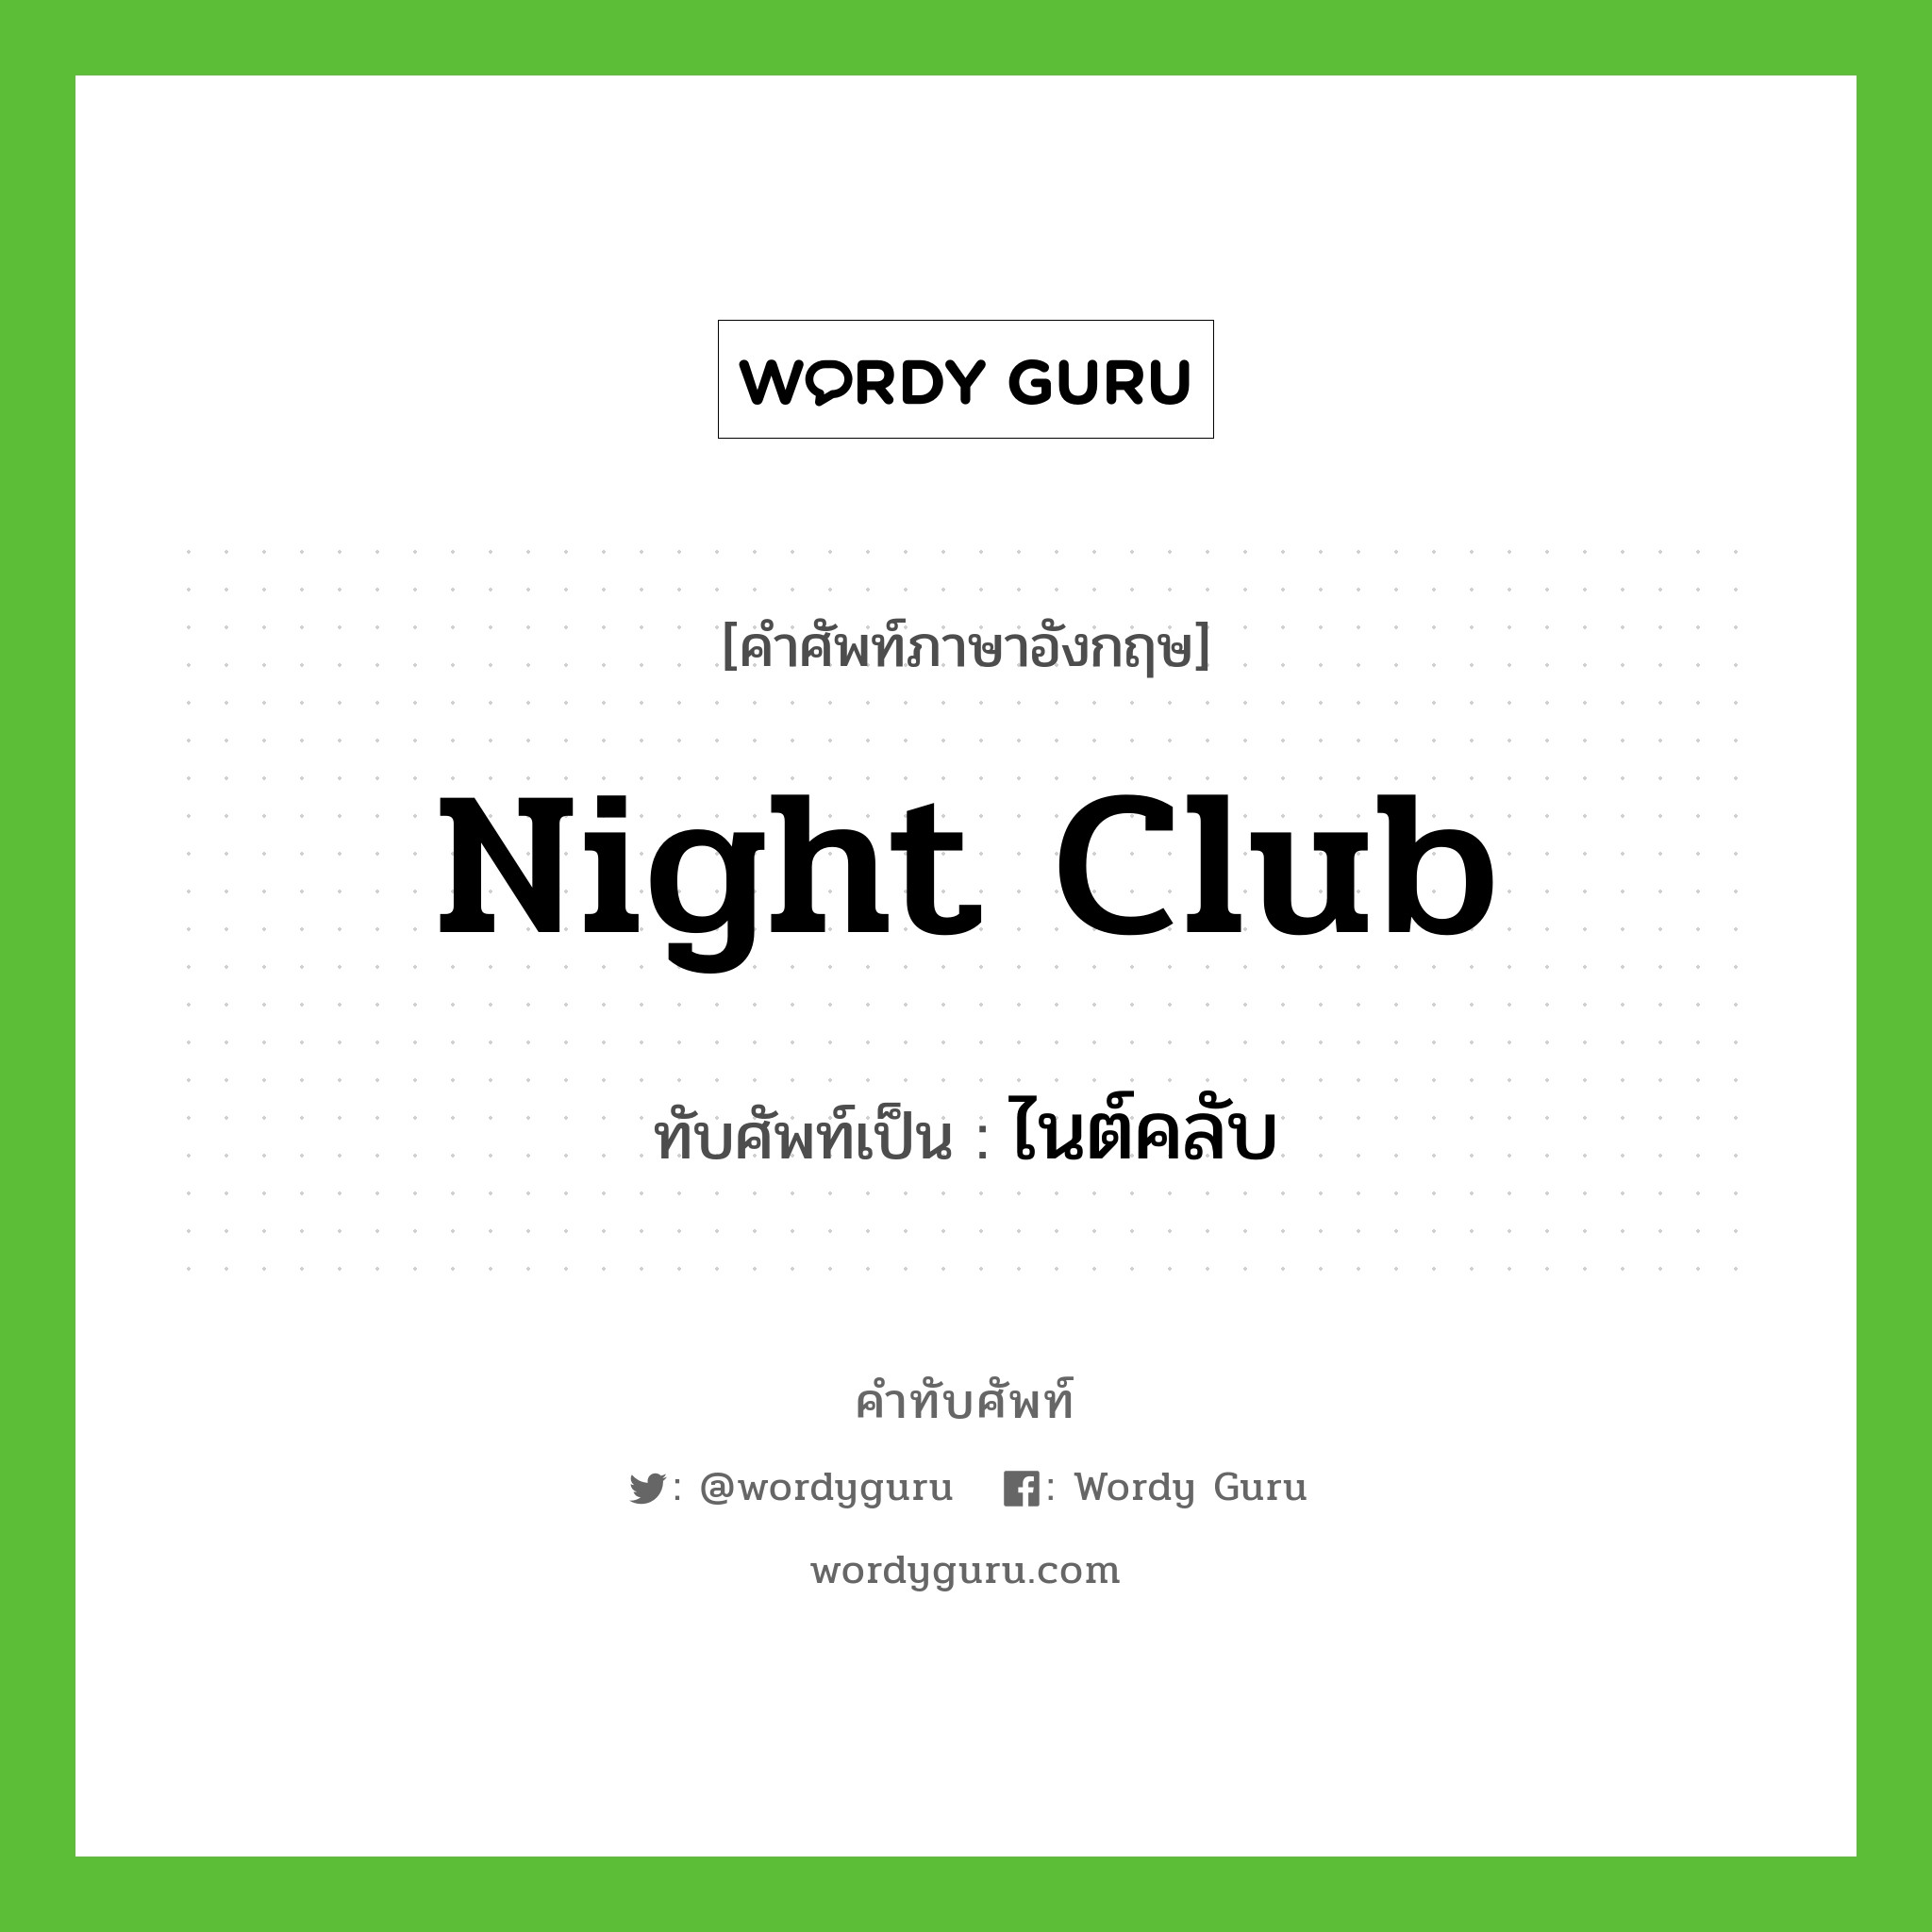 night club เขียนเป็นคำไทยว่าอะไร?, คำศัพท์ภาษาอังกฤษ night club ทับศัพท์เป็น ไนต์คลับ